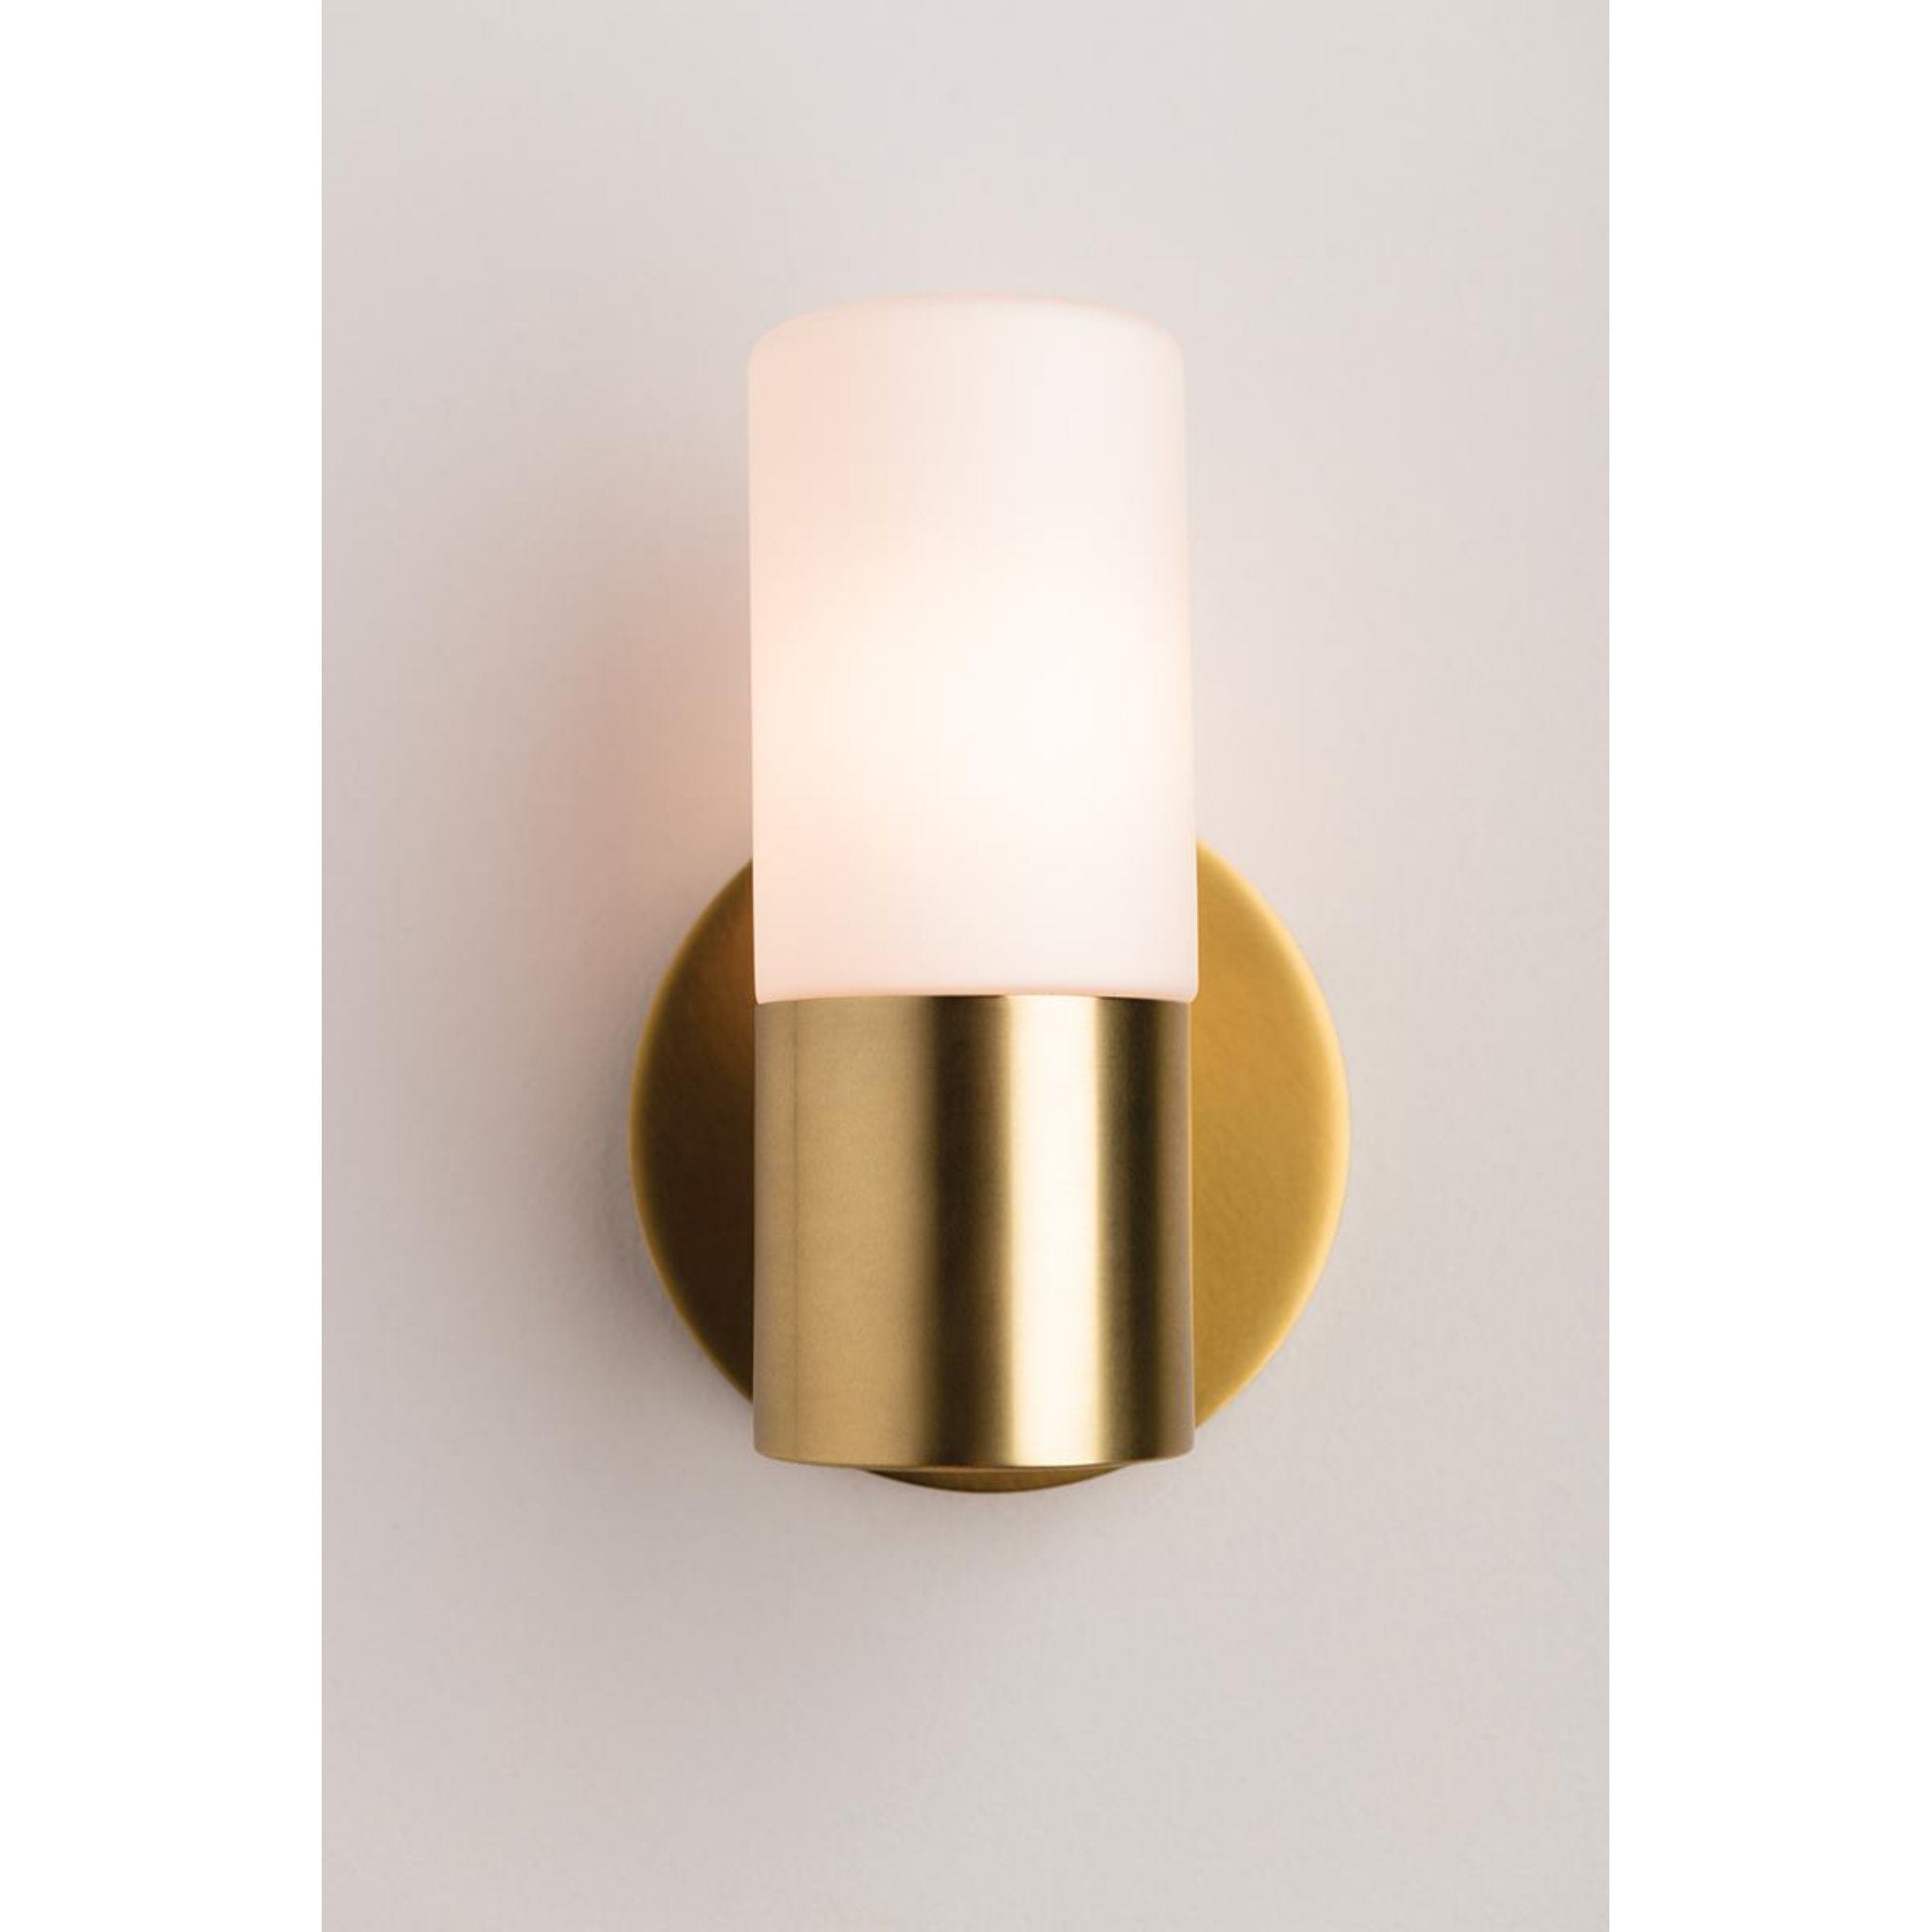 Lola 1 Light Floor Lamp in Aged Brass